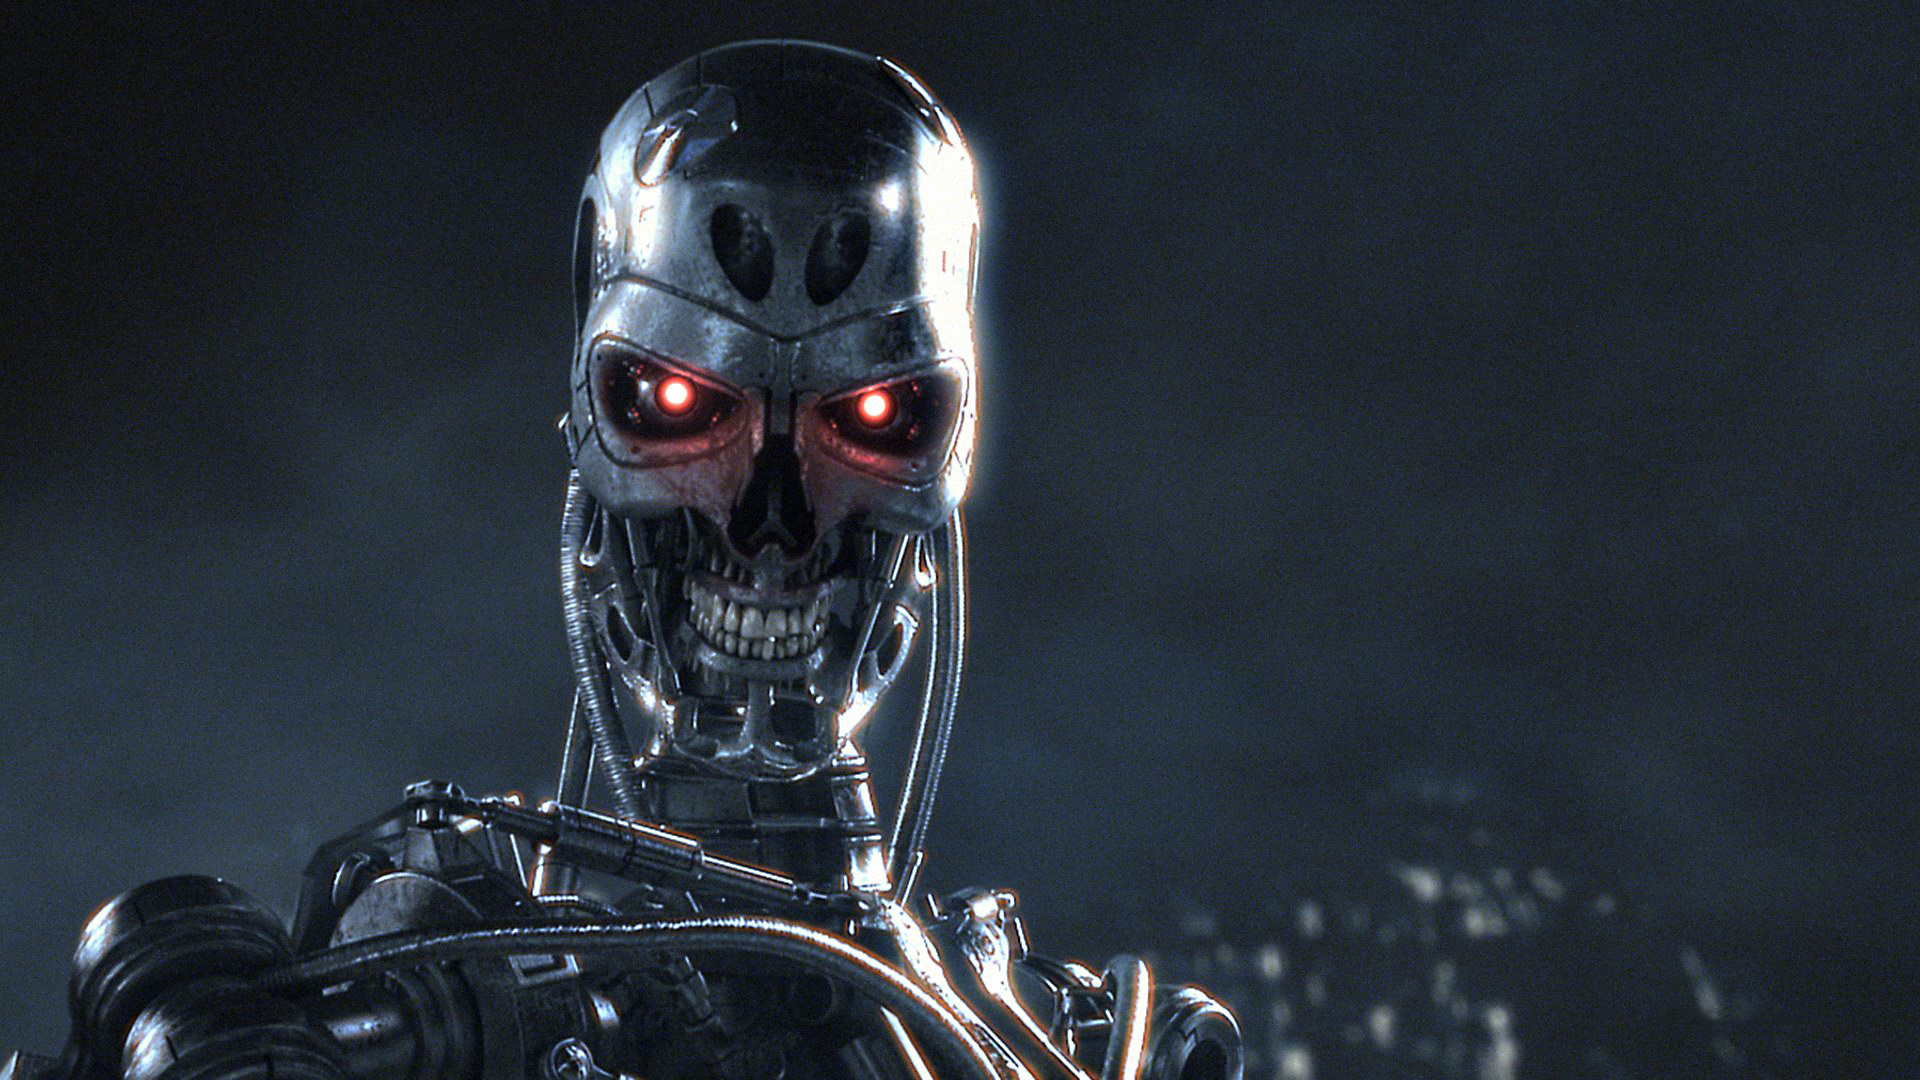 t-800-robots-in-upcoming-movie-terminator-5-genesis.jpeg